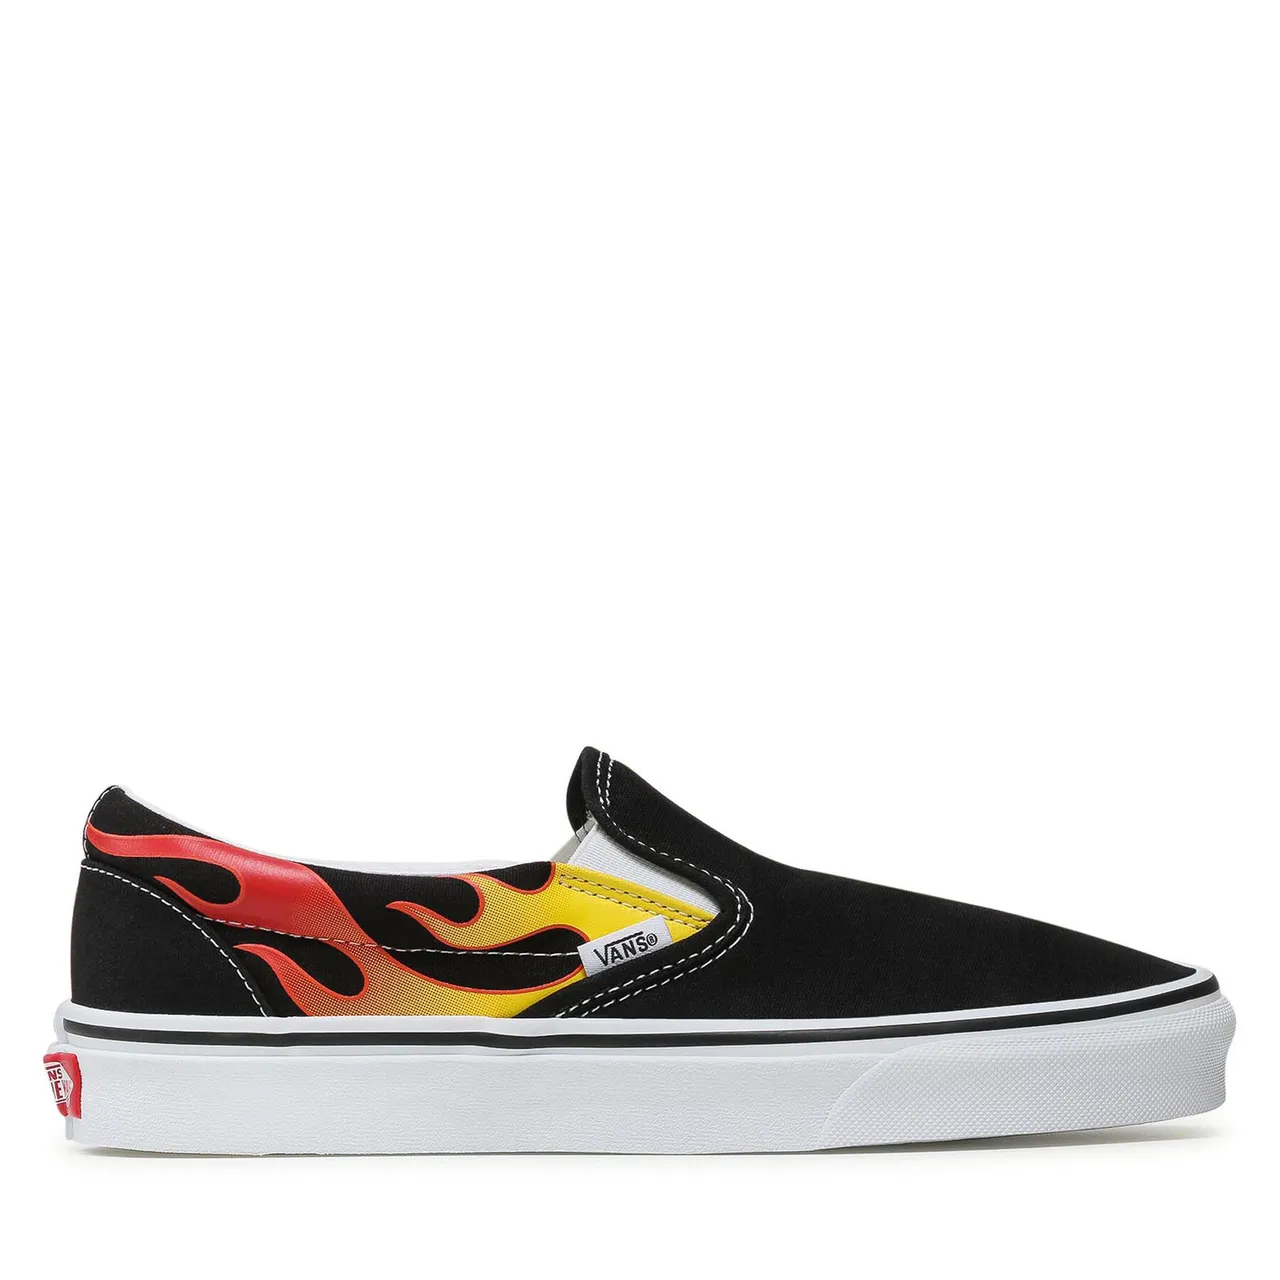 Sneakers aus Stoff Vans Classic Slip-On VN0A38F7PHN1 (Flame) Black/Black/Tr Wht